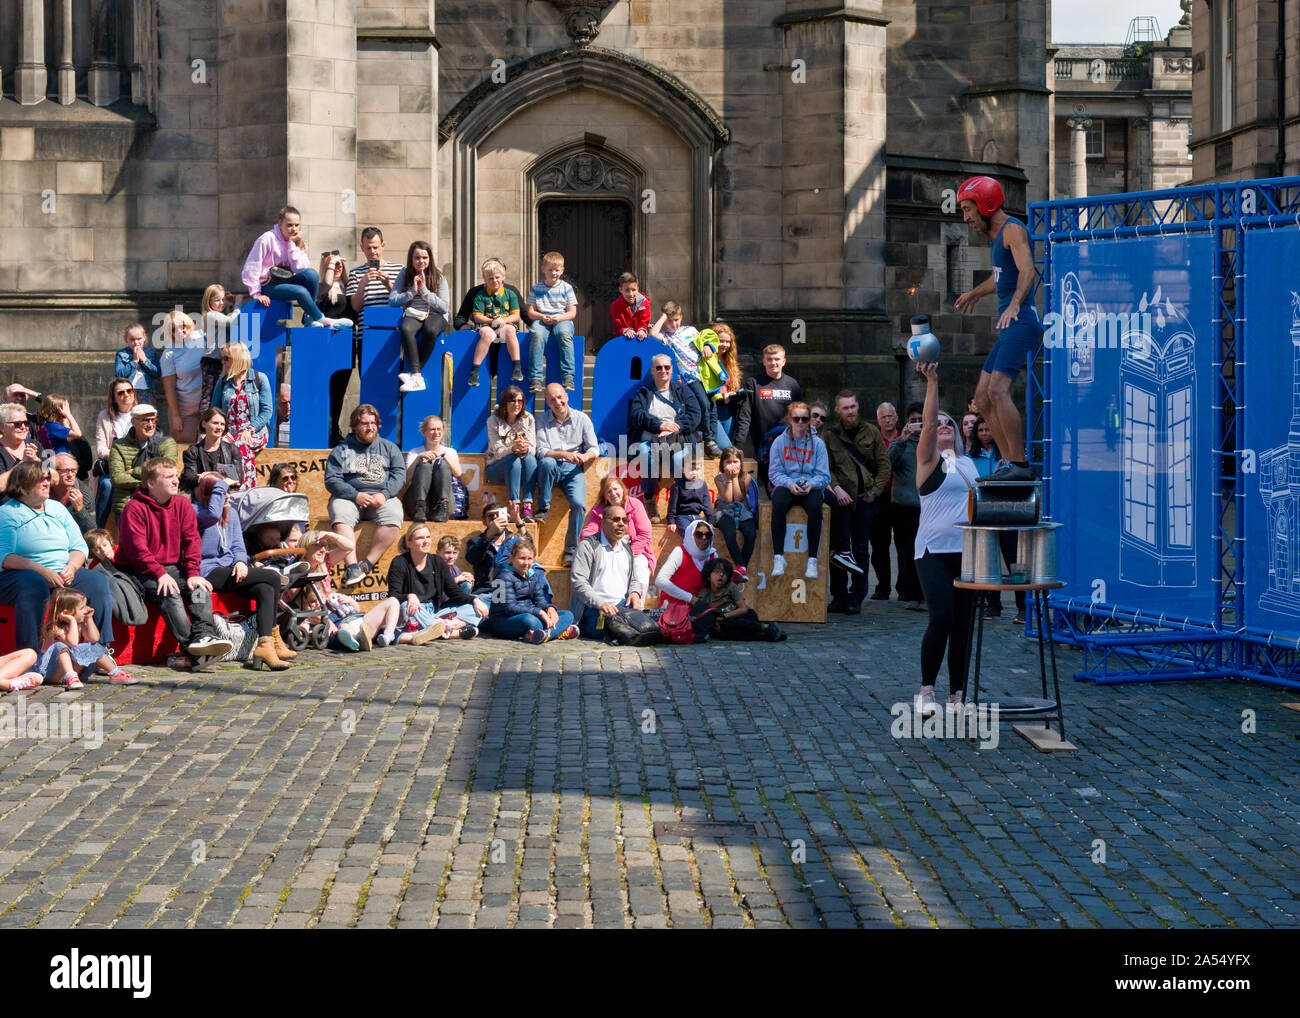 Jongleur Street Performer auf der Royal Mile. Edinburgh Fringe Festival, Schottland Stockfoto